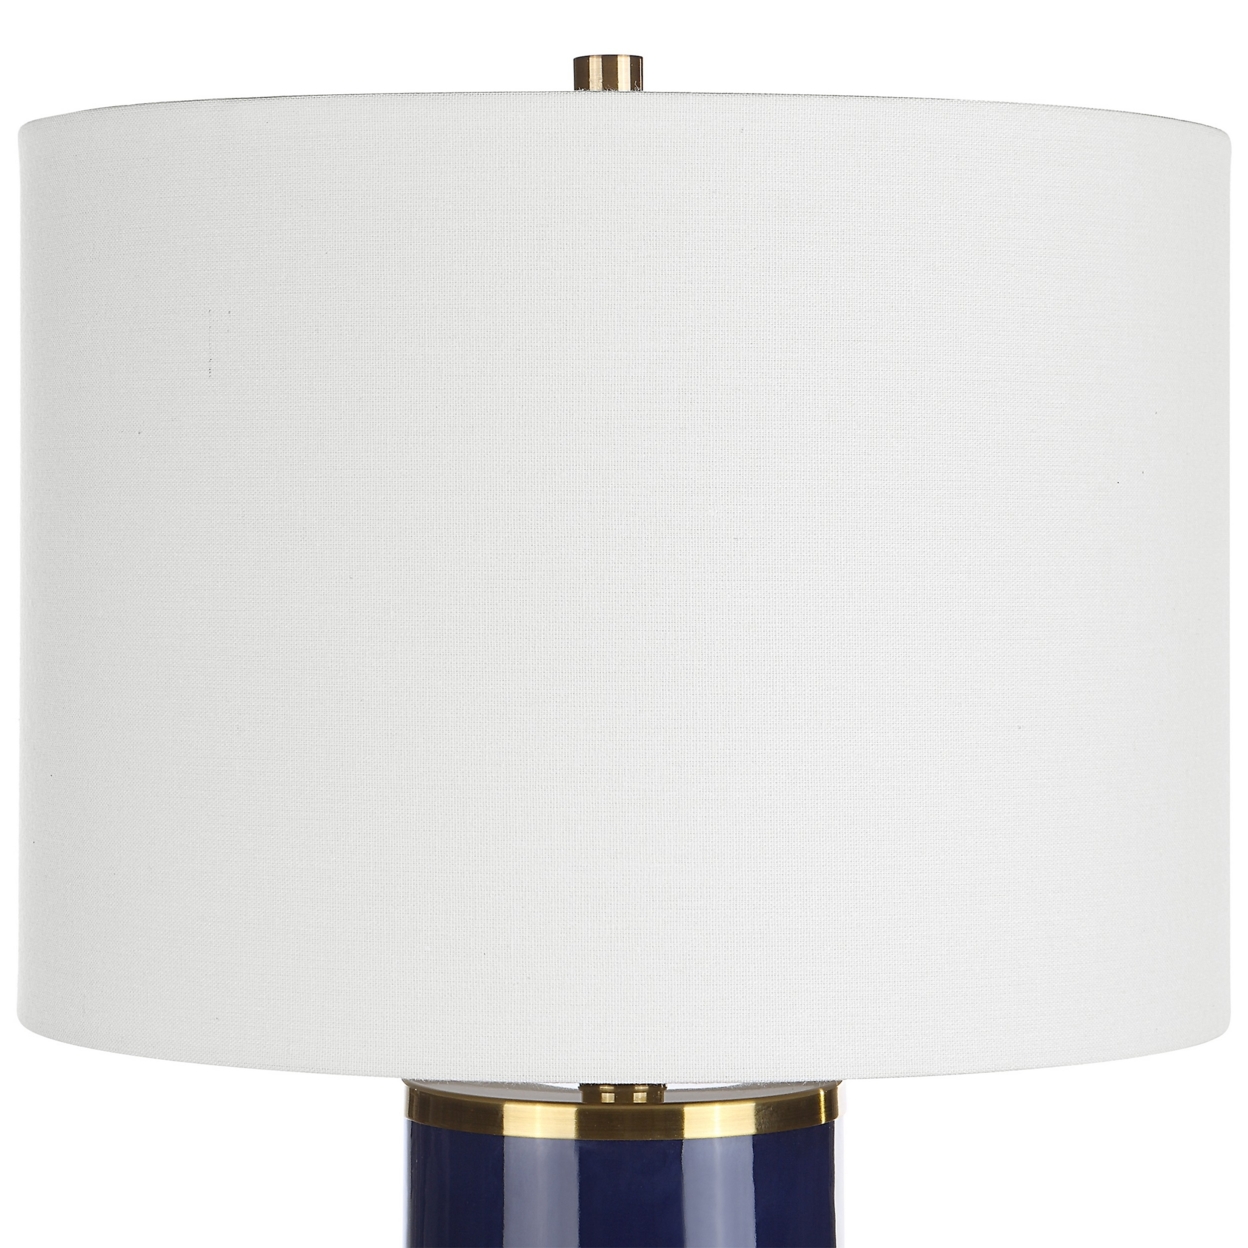 26 Inch Modern Table Lamp, Hardback Linen Shade, Ceramic Body, Blue, Gold- Saltoro Sherpi